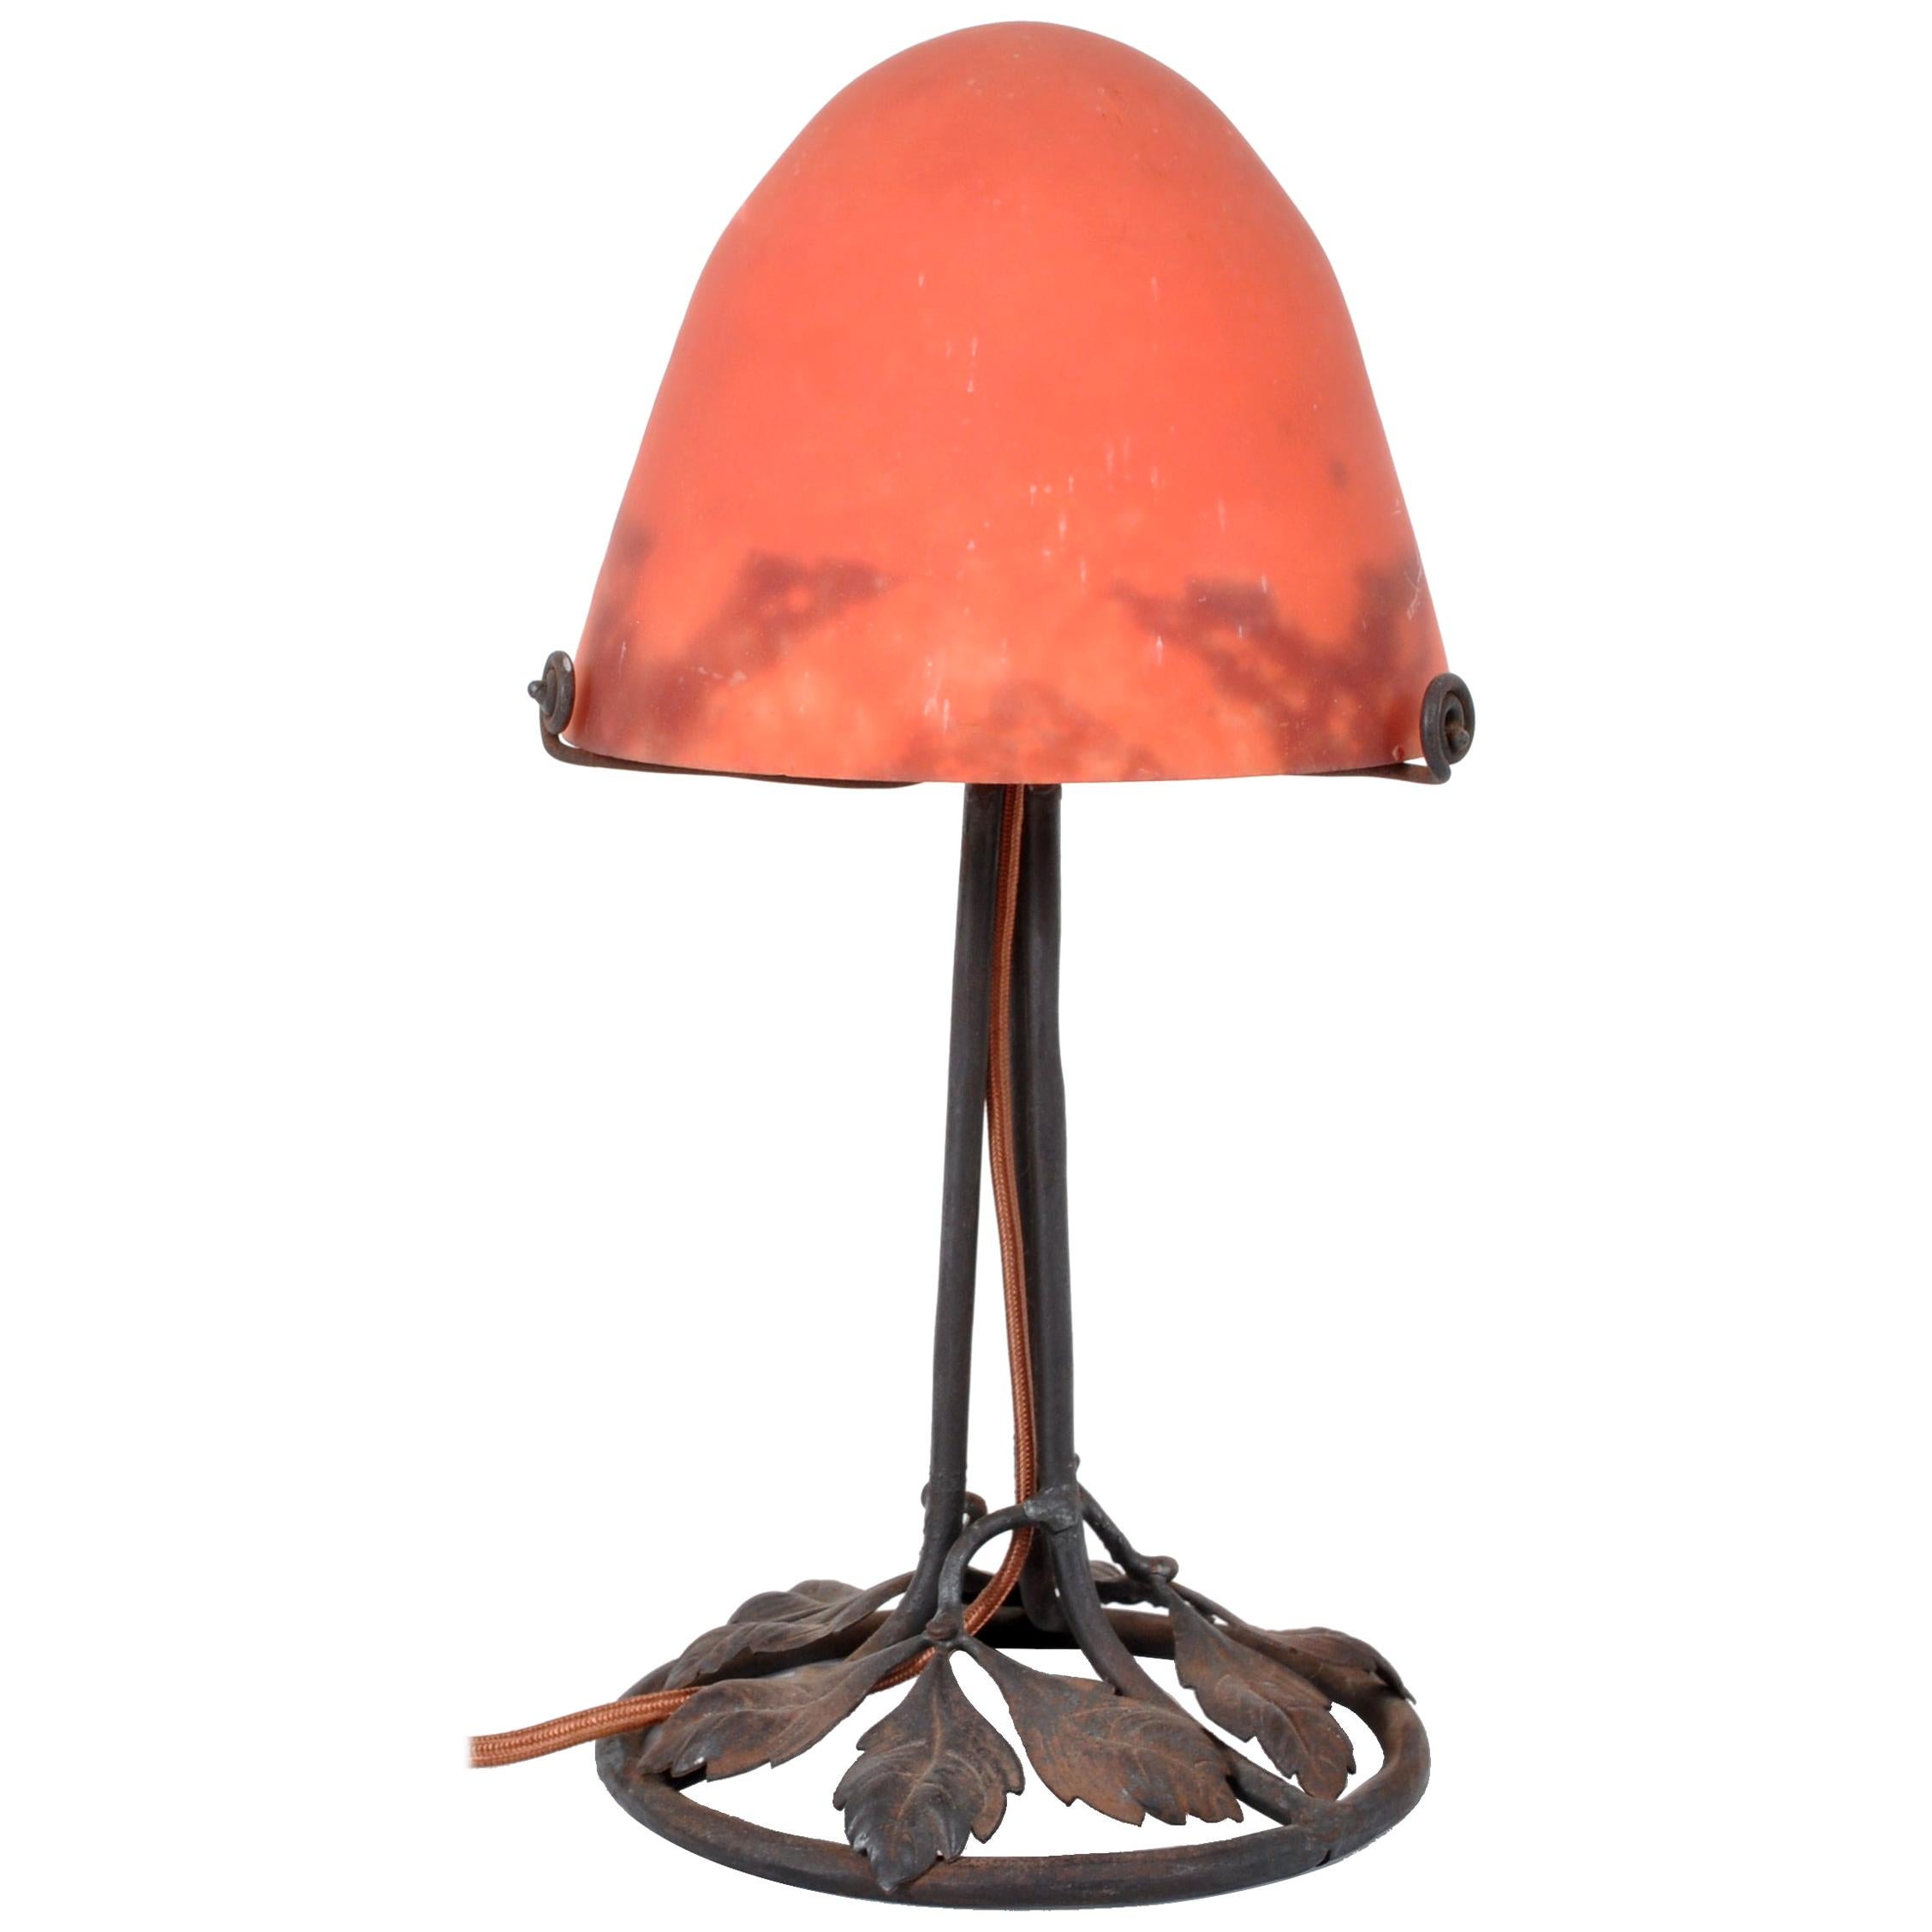 Antique French Art Deco 'Mushroom' Edgar Brandt Wrought Iron Daum Table Lamp